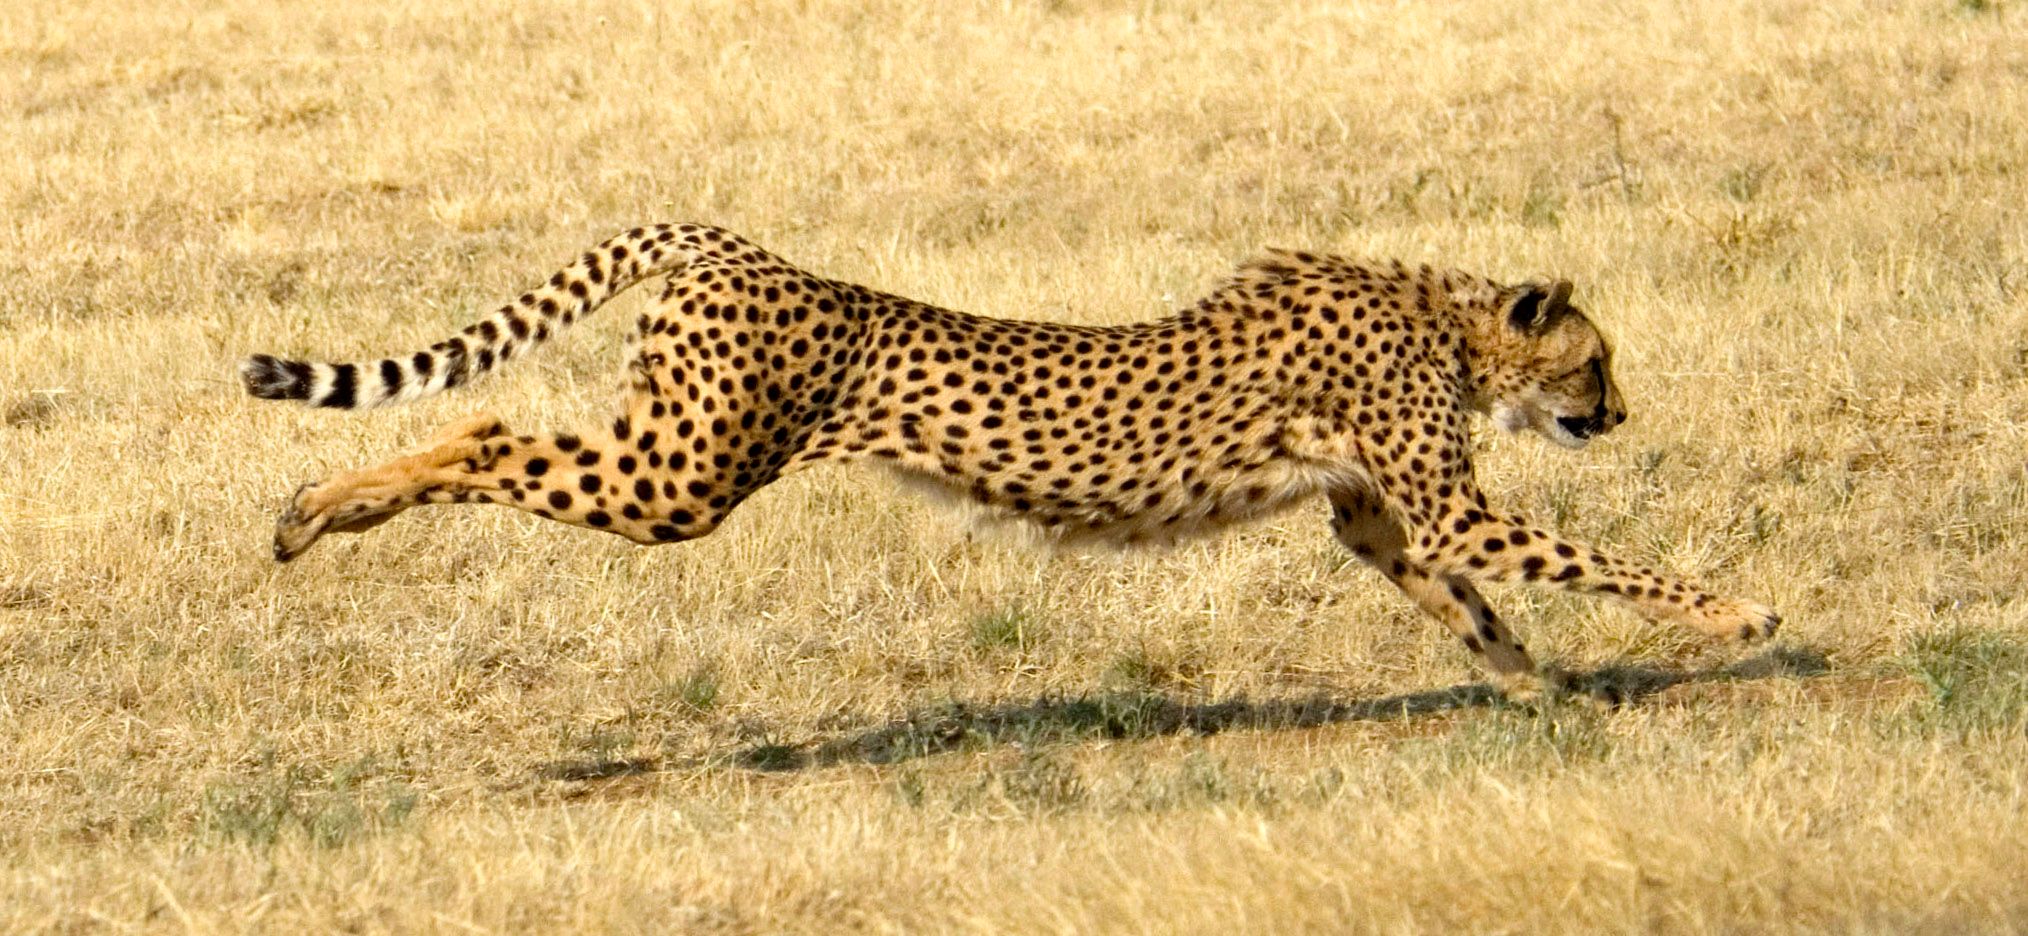 Cheetah running in the savanna. Cheetah in Namibia, Africa. 